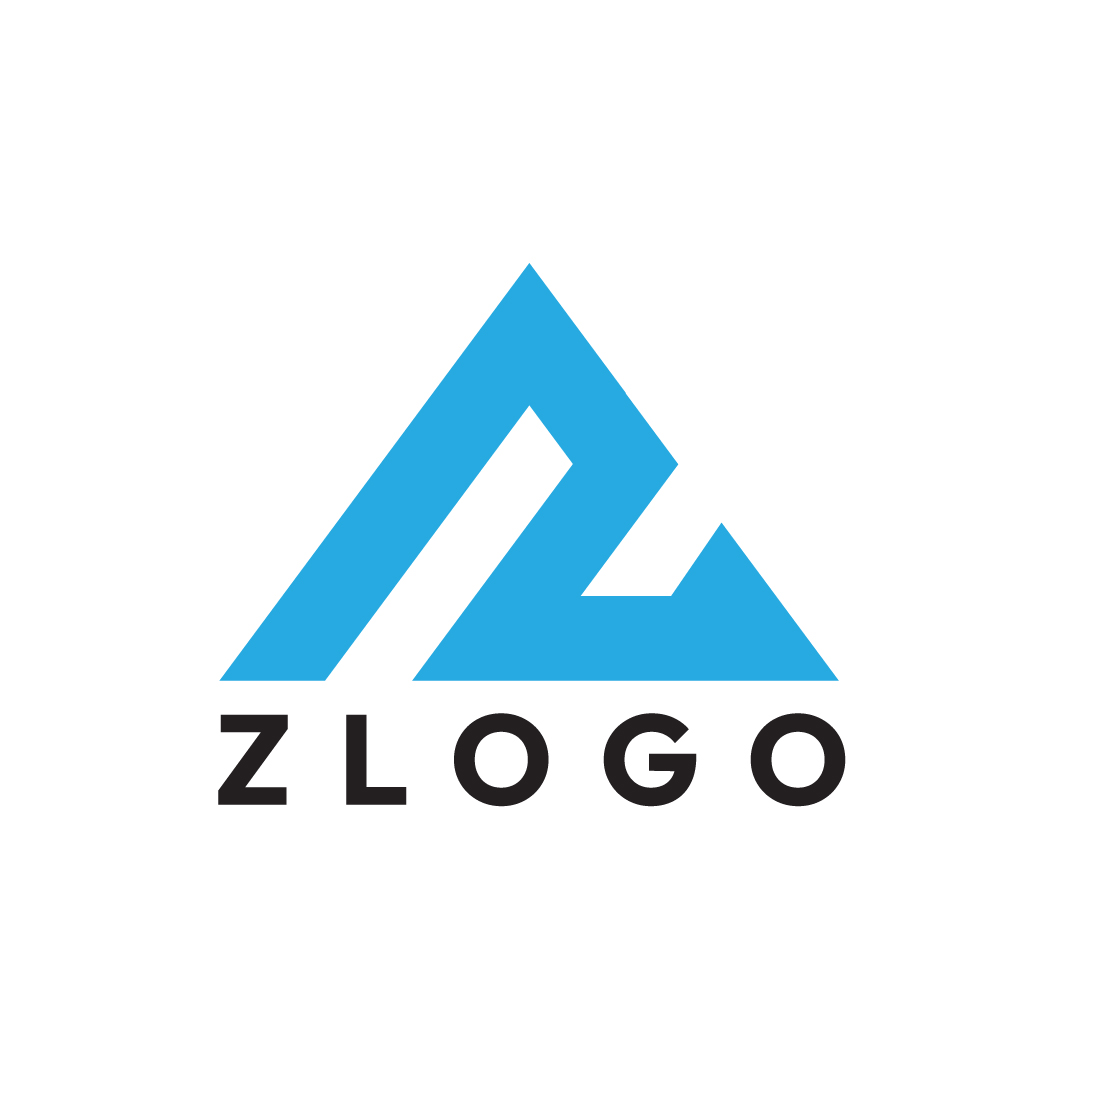 Z Triangle Logo Design Bundle: Master Your Brand Identity cover image.